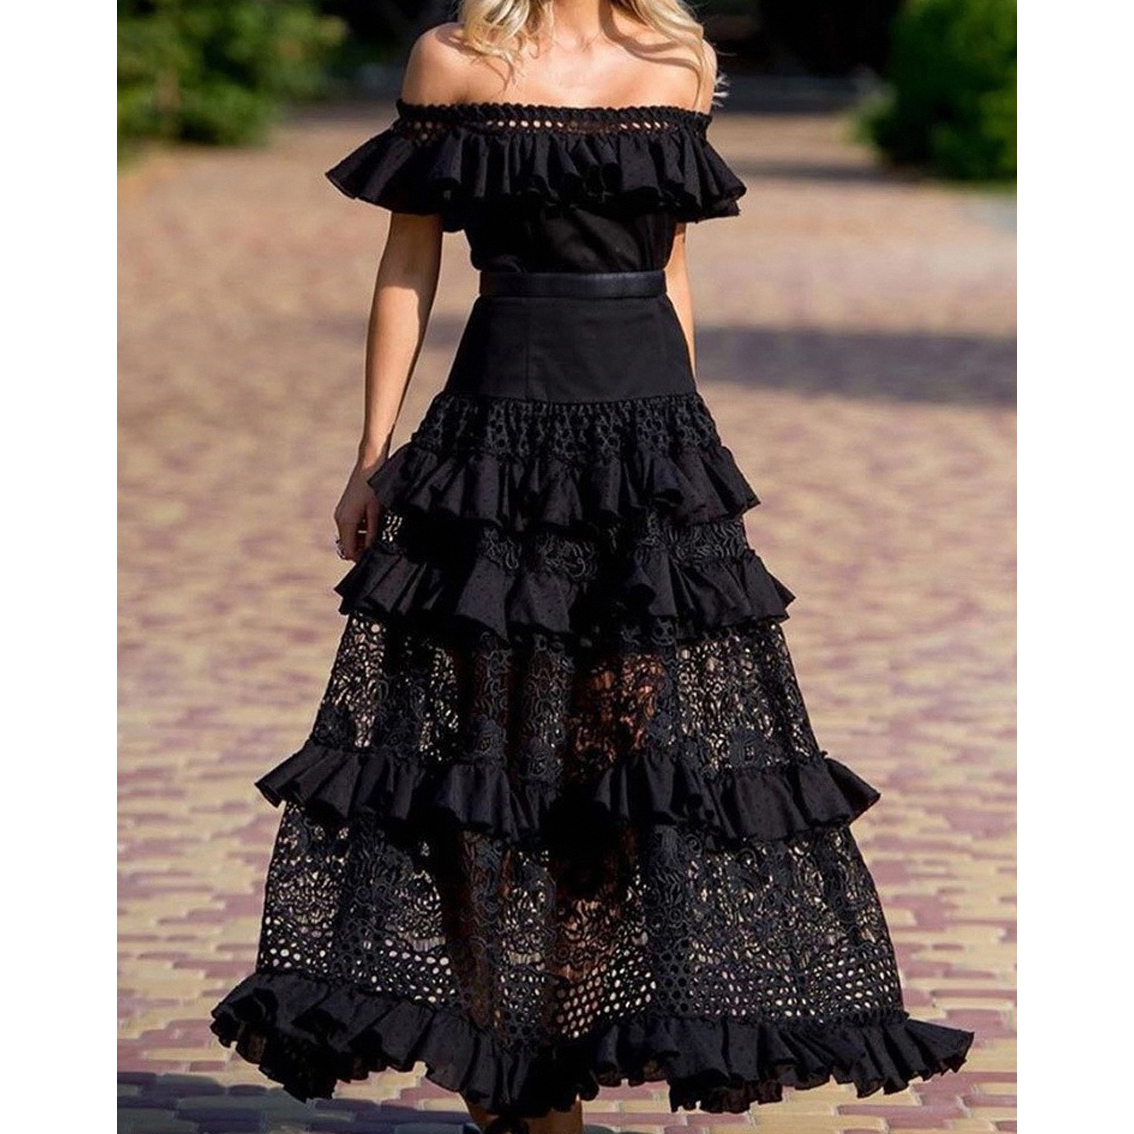 Sexy Lace Strap Maxi Dress - Black, S